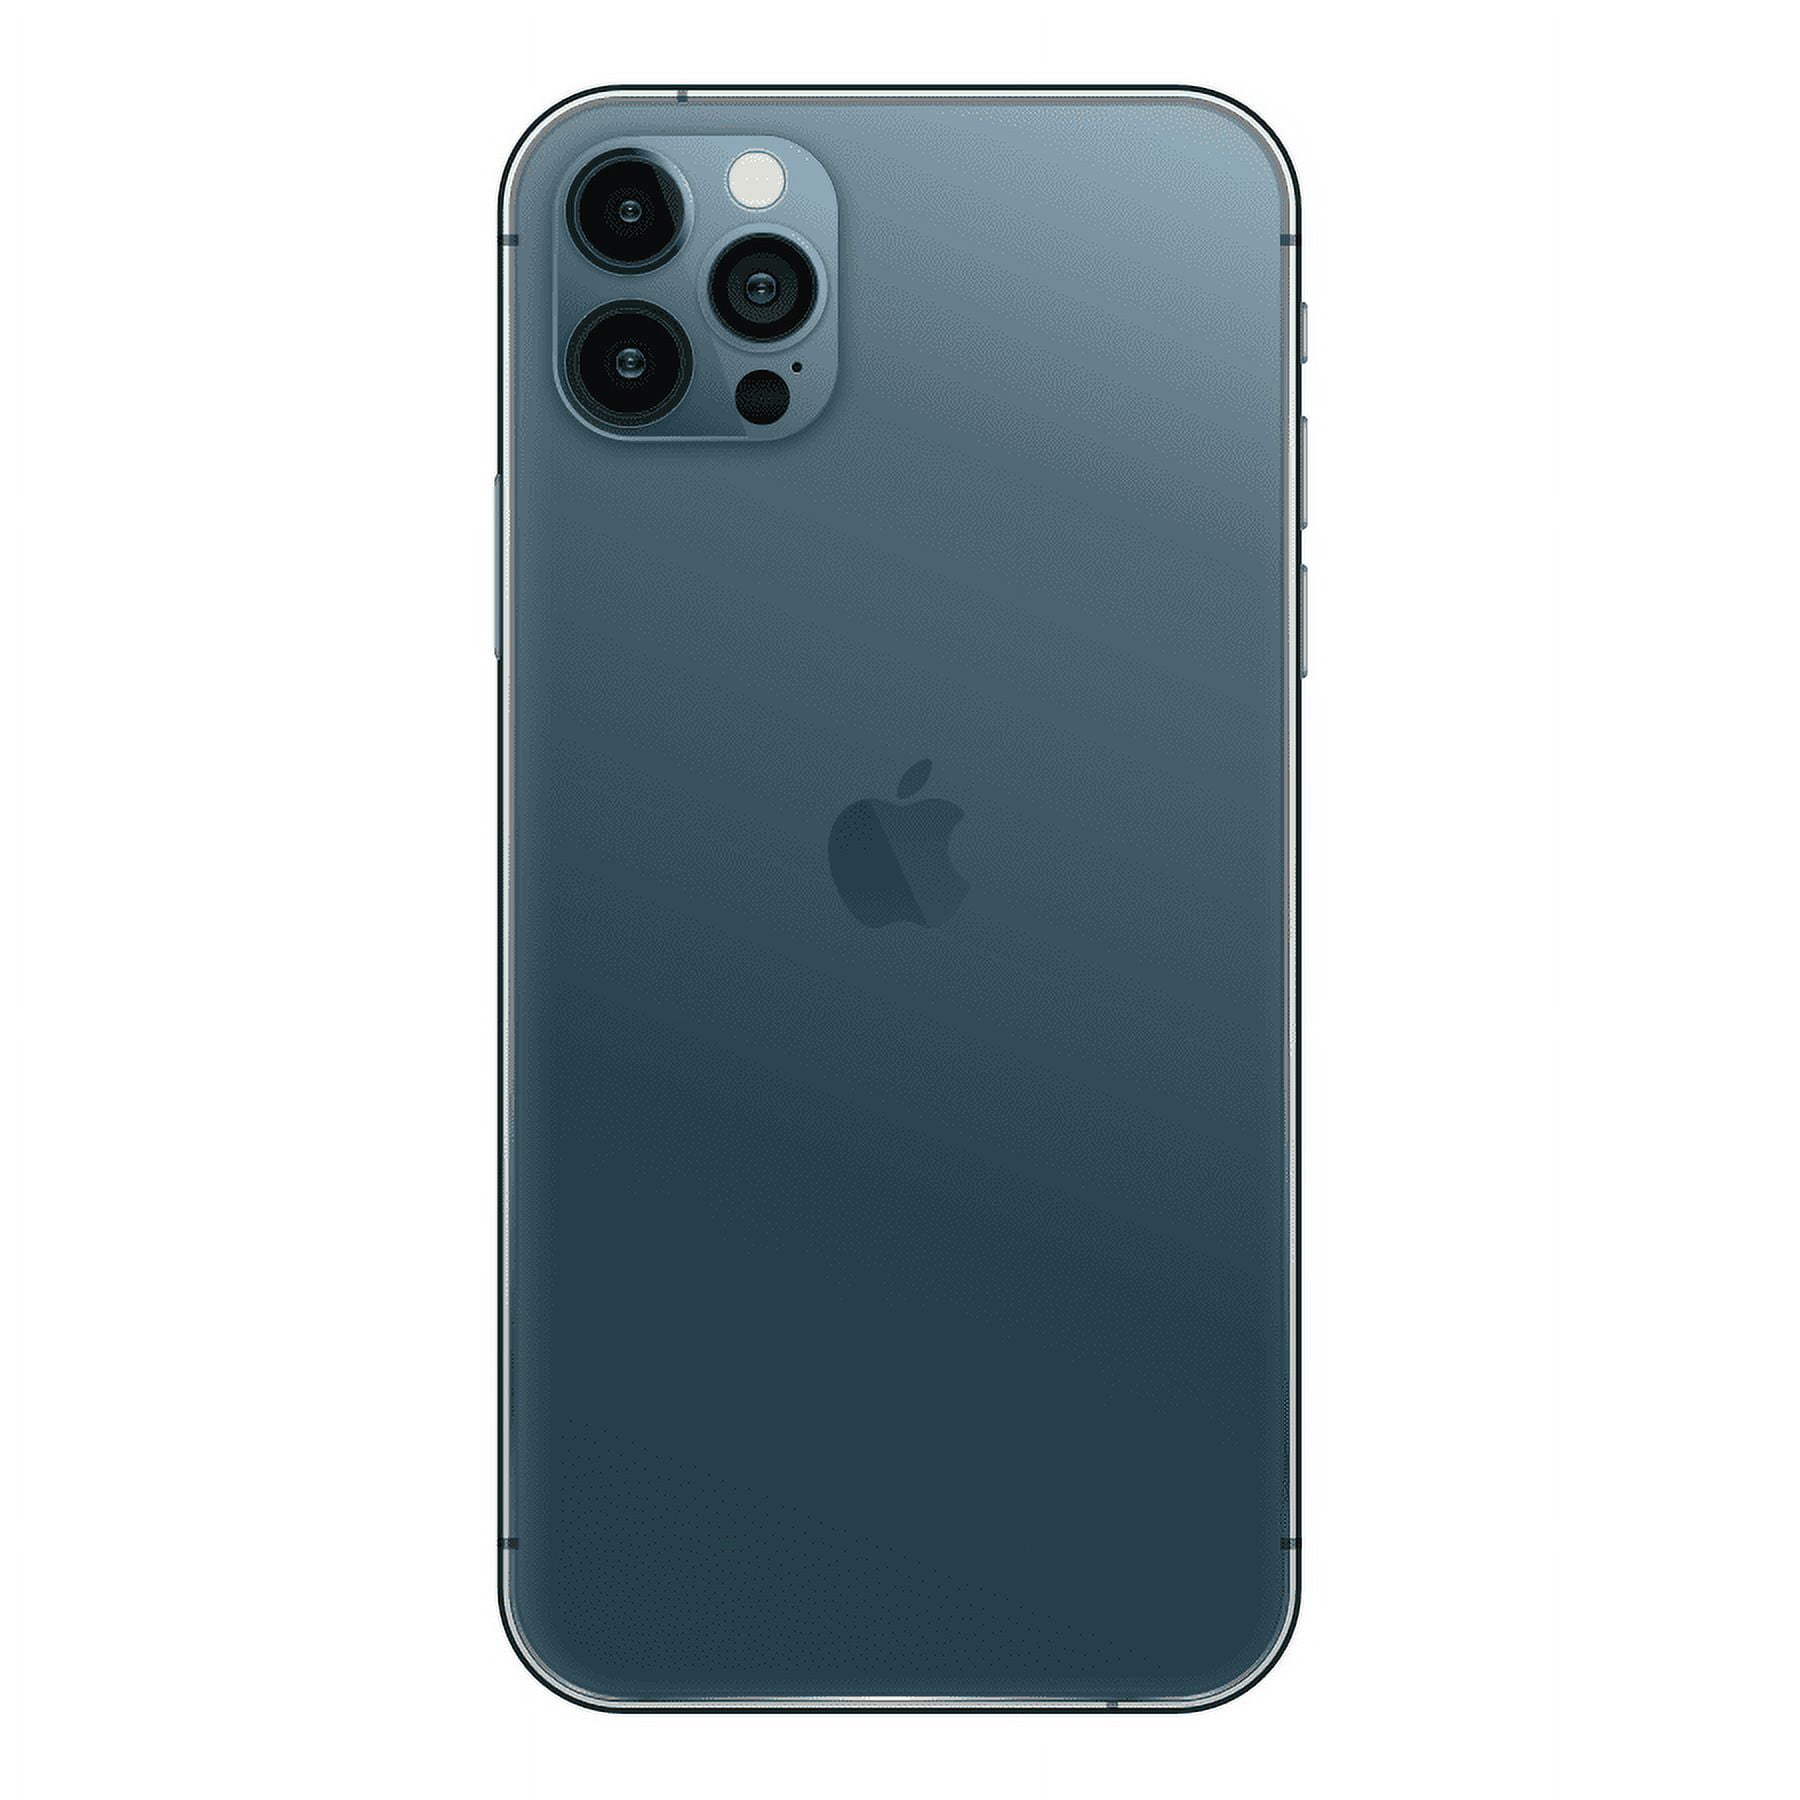 iPhone 12 Pro 256GB Pazifikblau refurbished